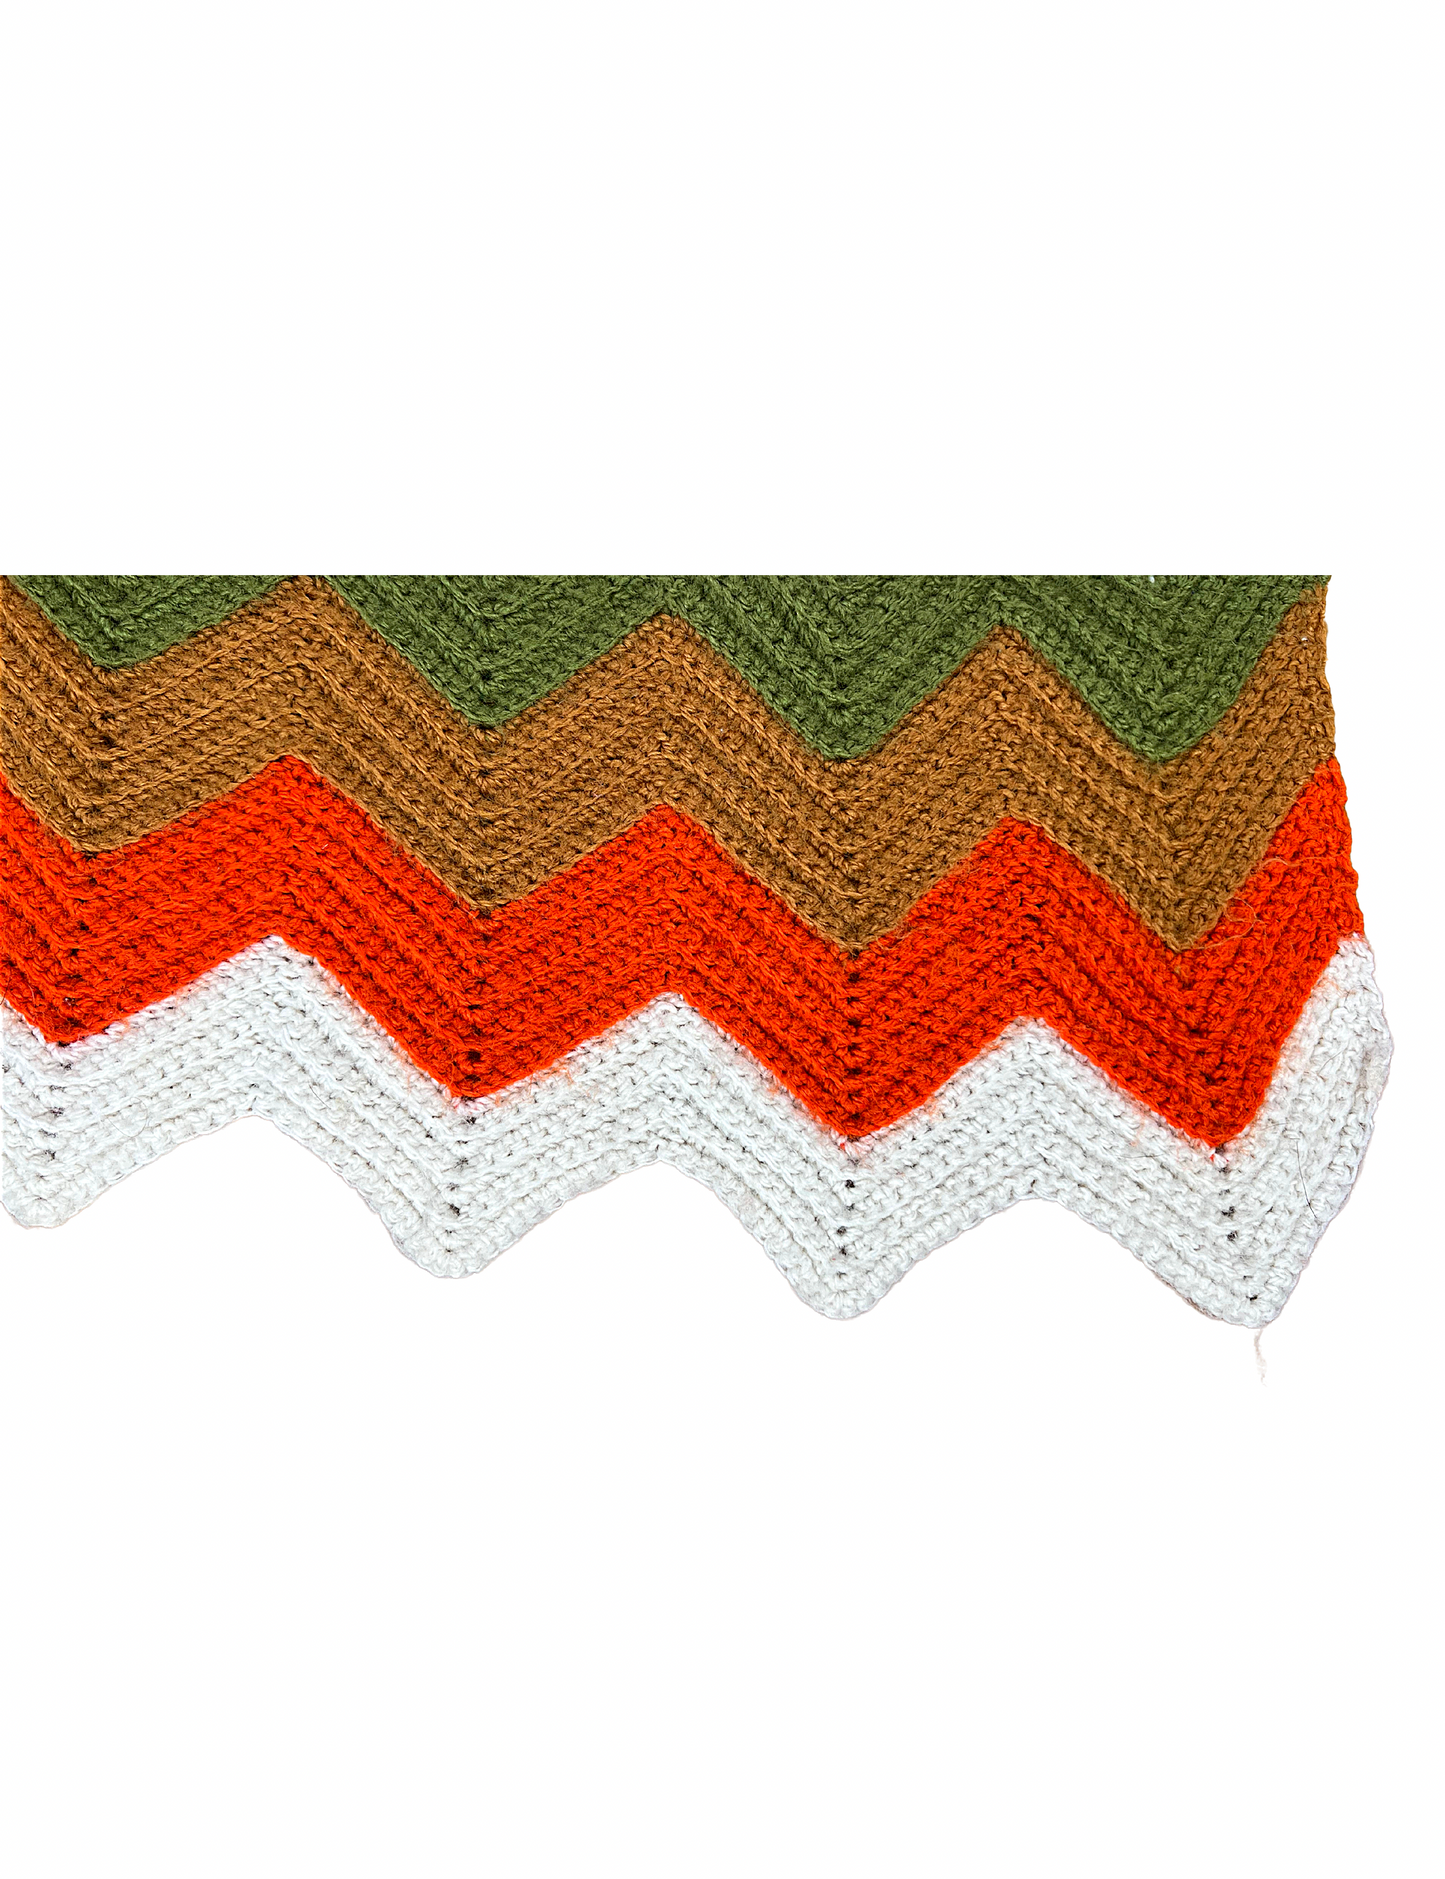 70’s Chevron Stripe Crocheted Boho Home Decor Afghan Throw Blanket 64” x 47”